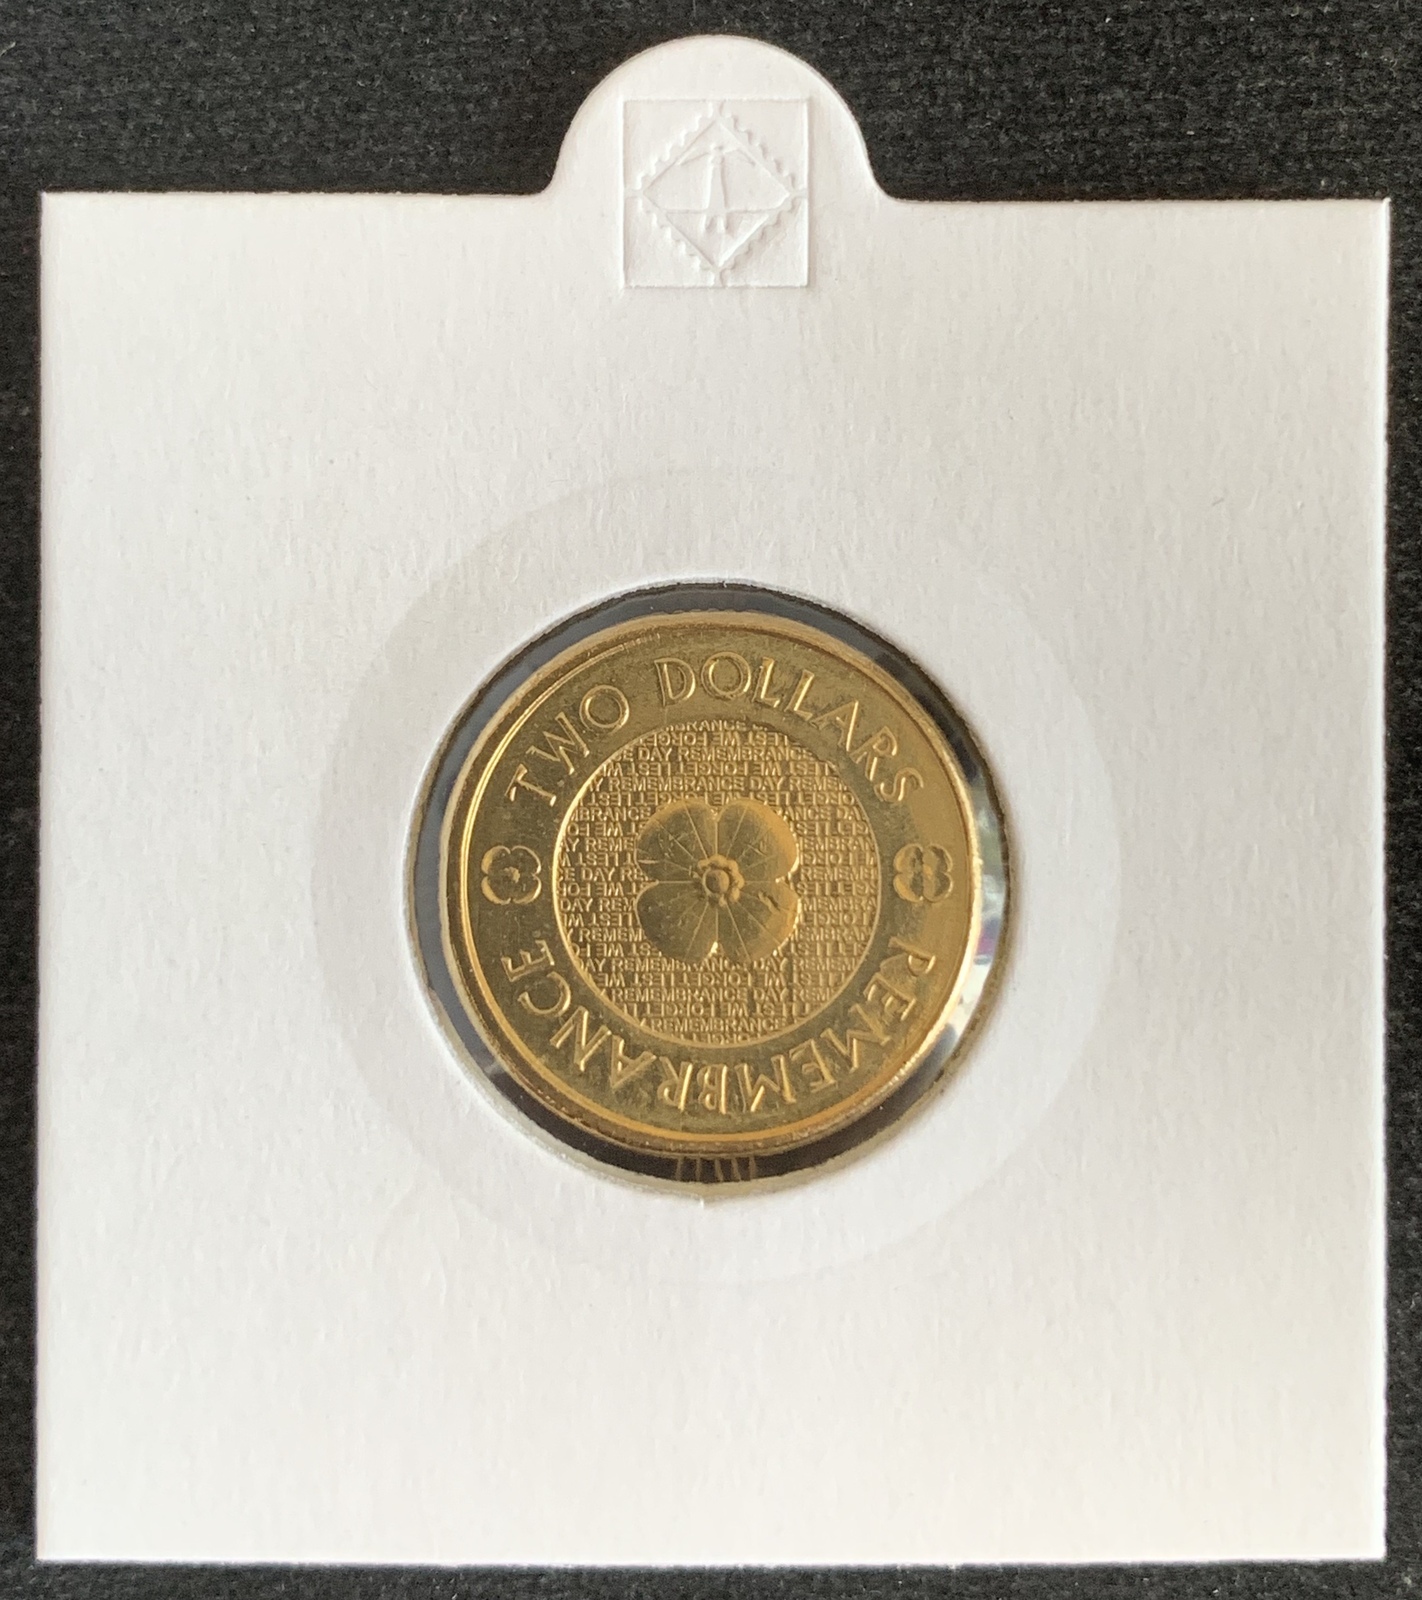 2012 - $2 Gold Poppy Coin